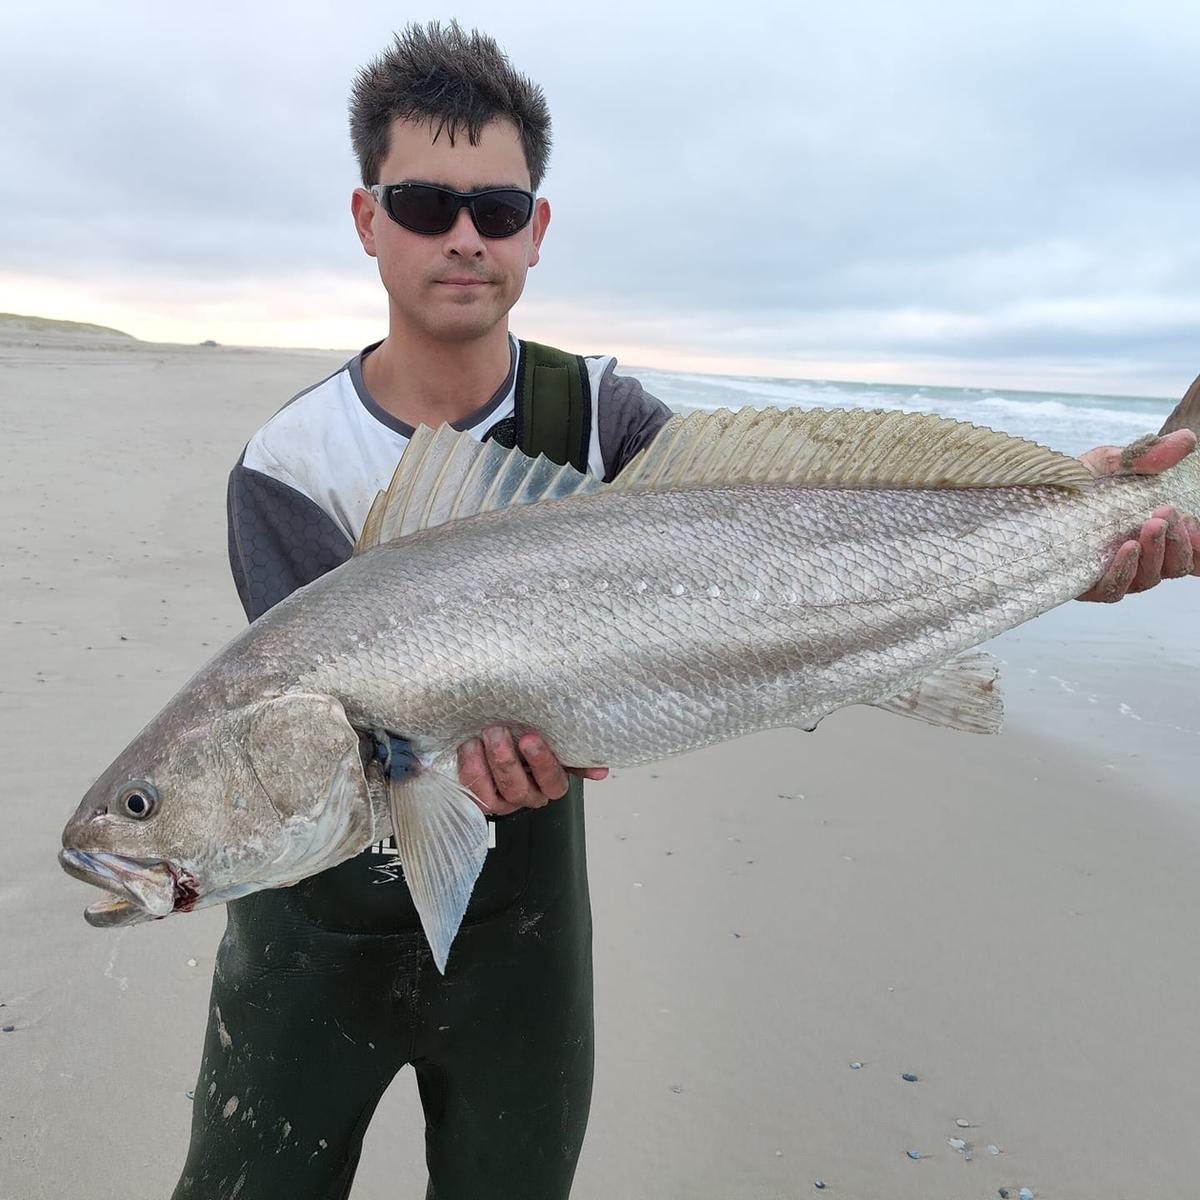 Matthew Gorne, an avid angler from Adelaide in South Australia, shows off his catch. (Courtesy of <a href="https://www.facebook.com/matthew.gorne">Matthew Gorne</a>)